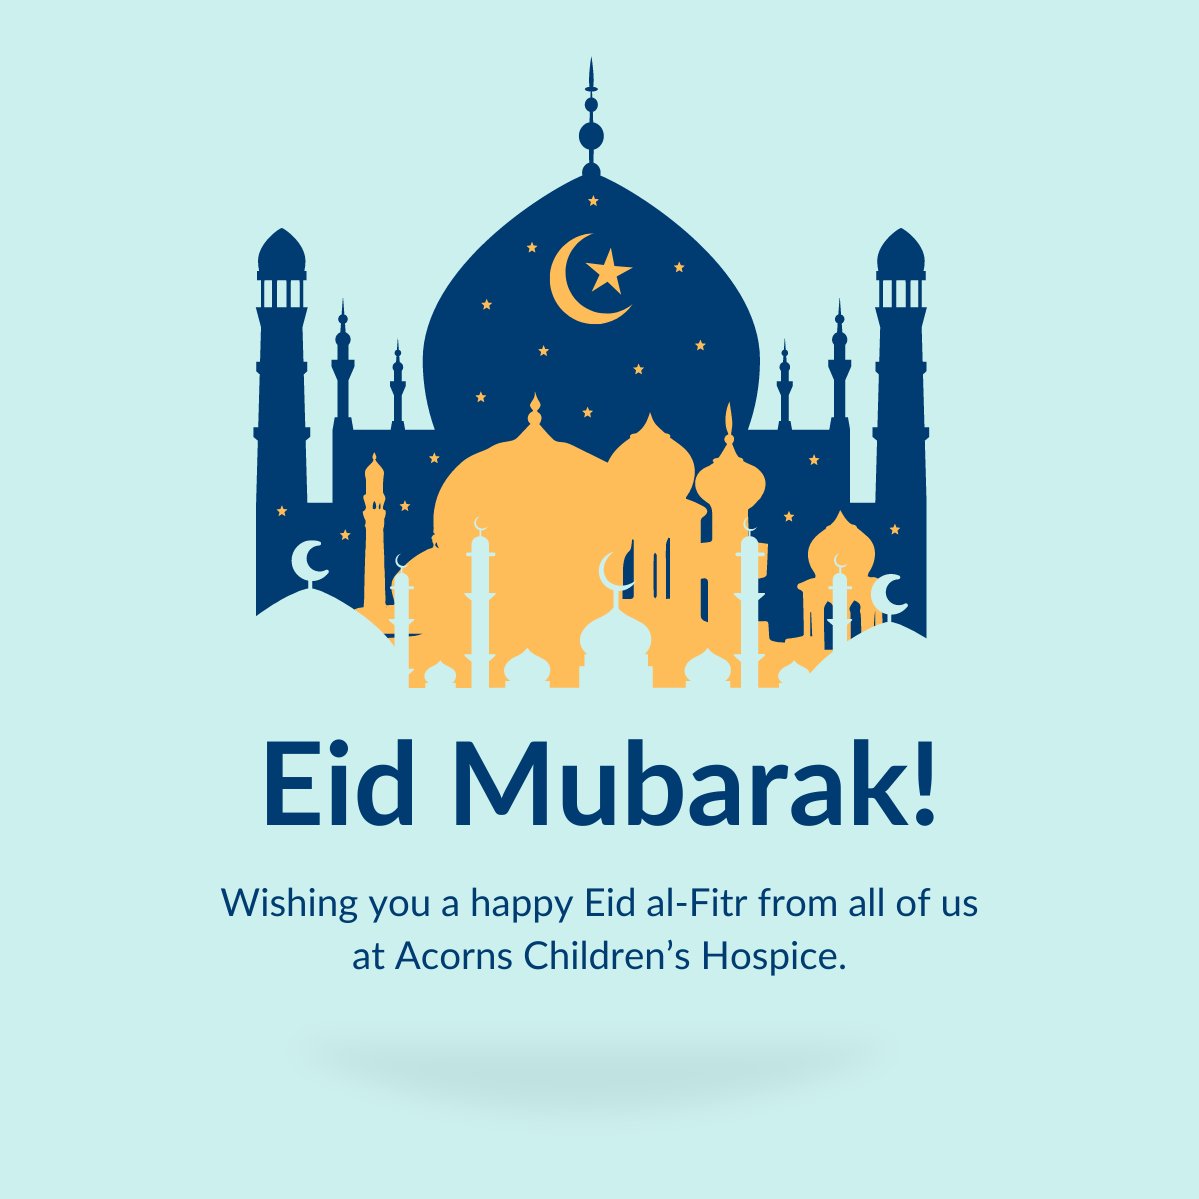 Eid Mubarak🌙✨ From all of us at Acorns, we wish you a very happy Eid al-Fitr!